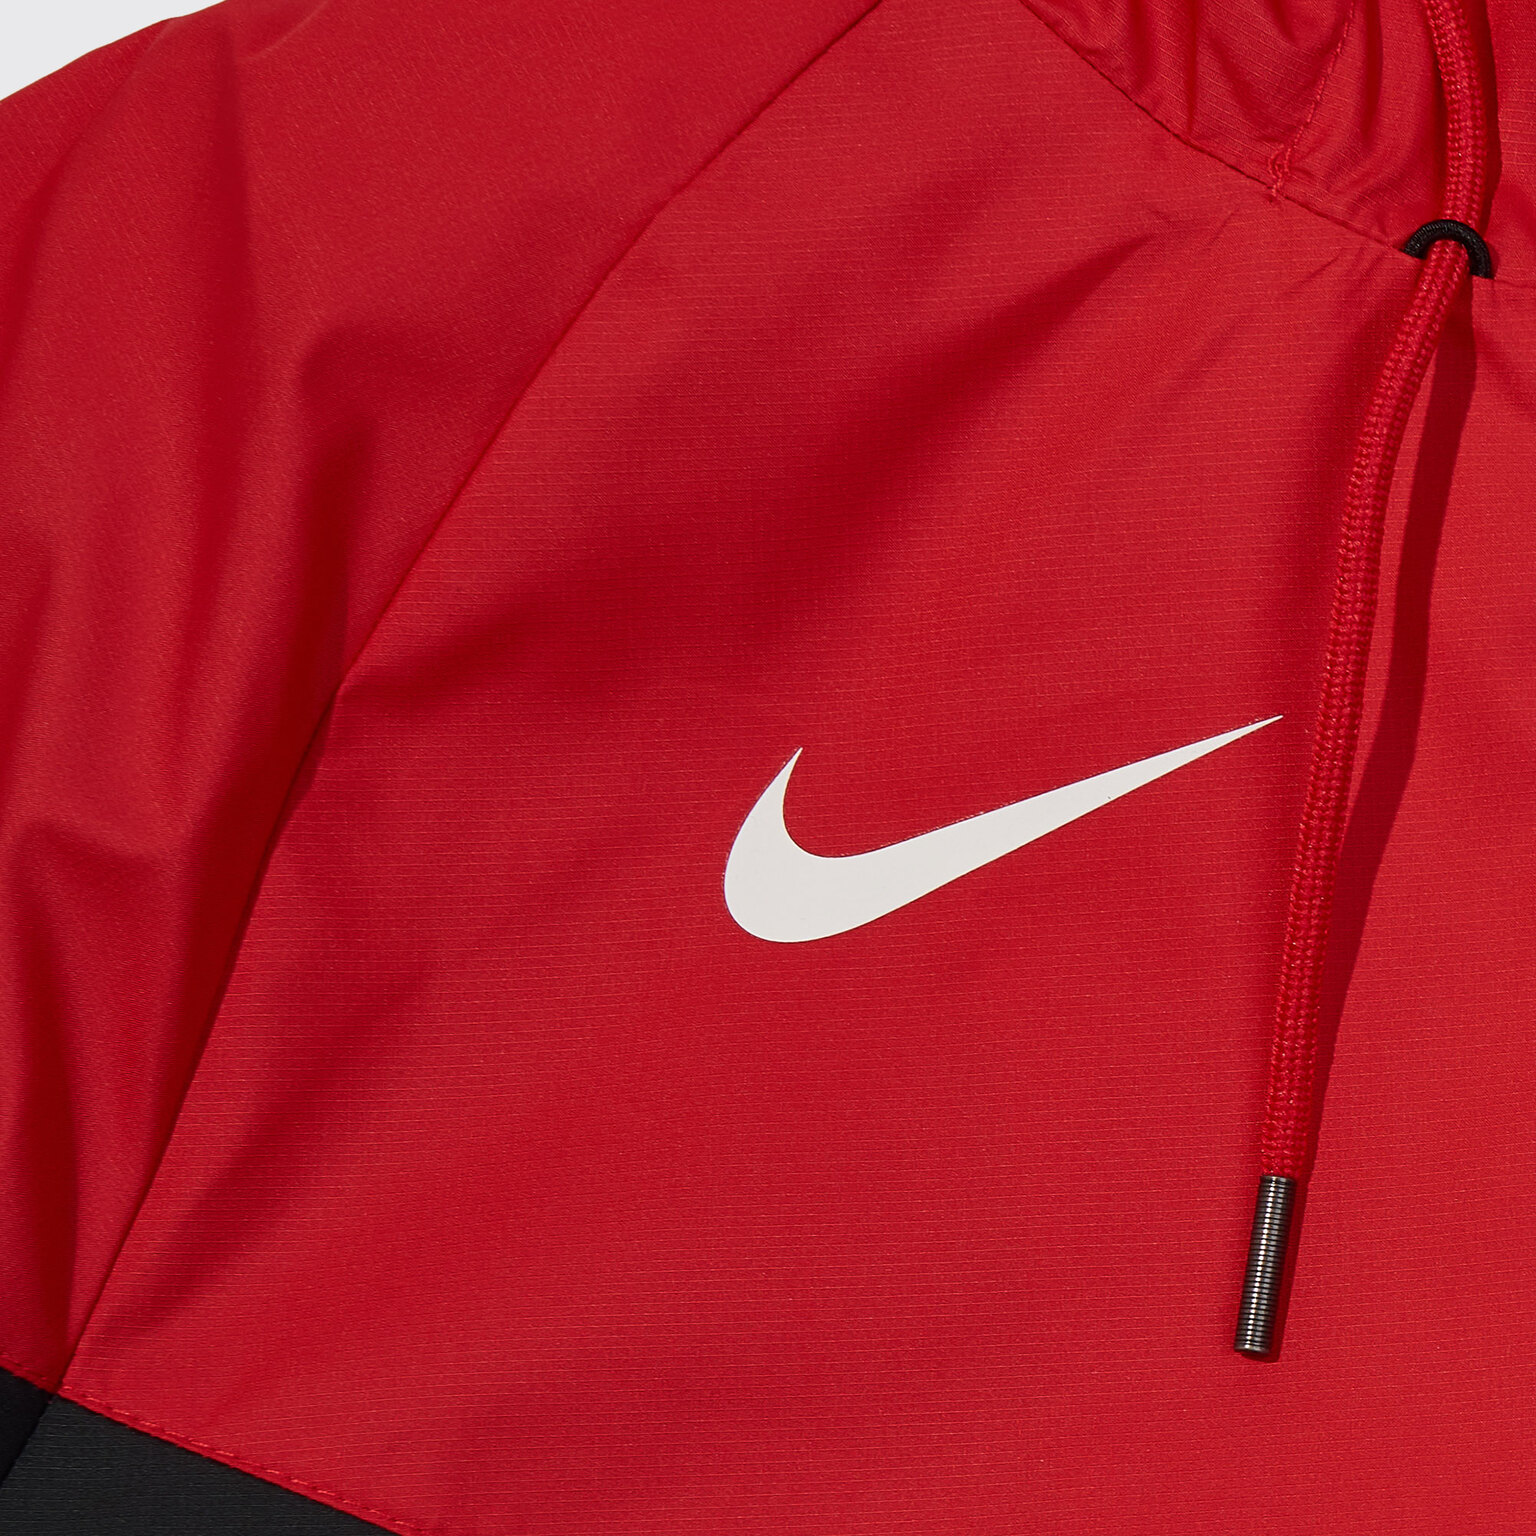 Ветровка Nike Liverpool сезон 2020/21